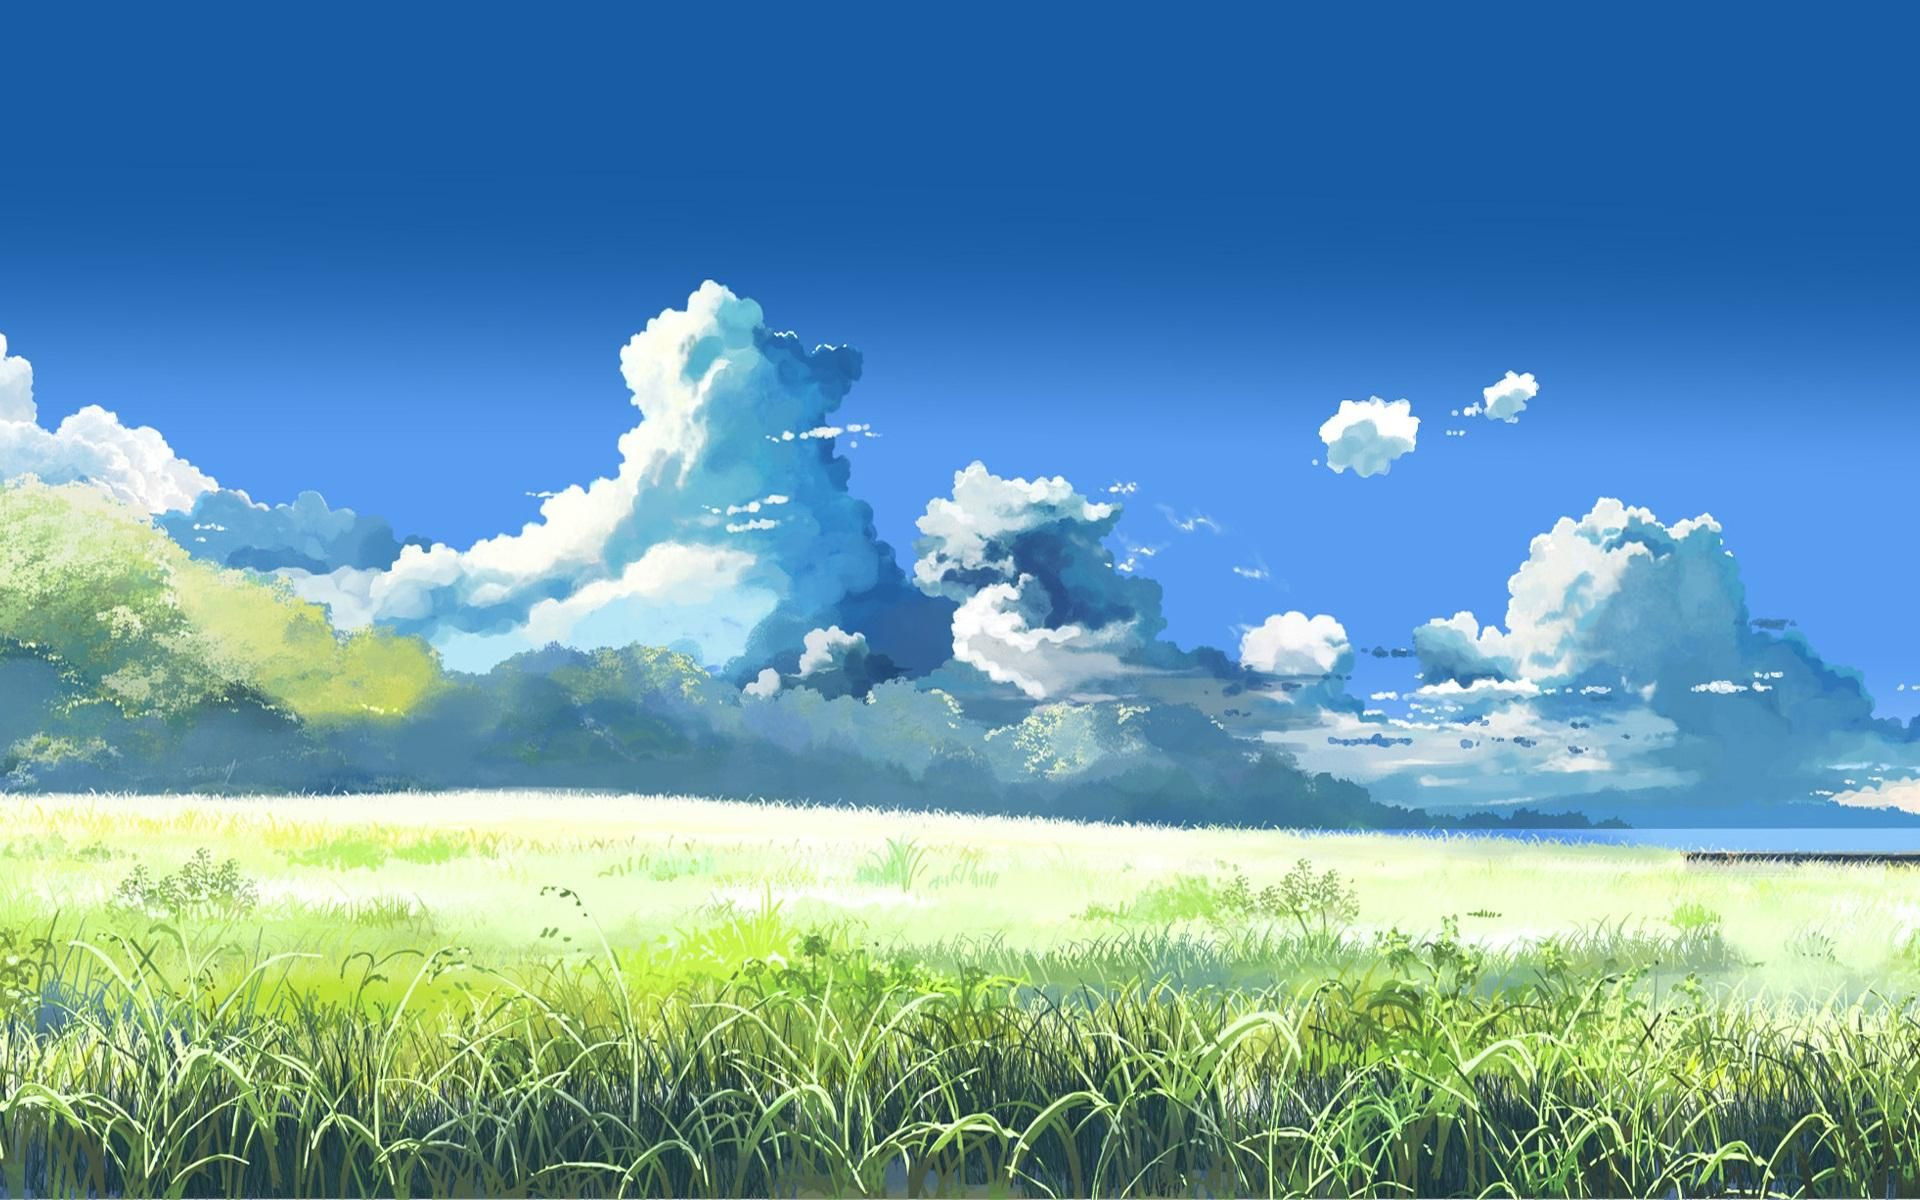 Best ideas about Anime Landscape Wallpaper
. Save or Pin Anime landscape Wallpapers Now.